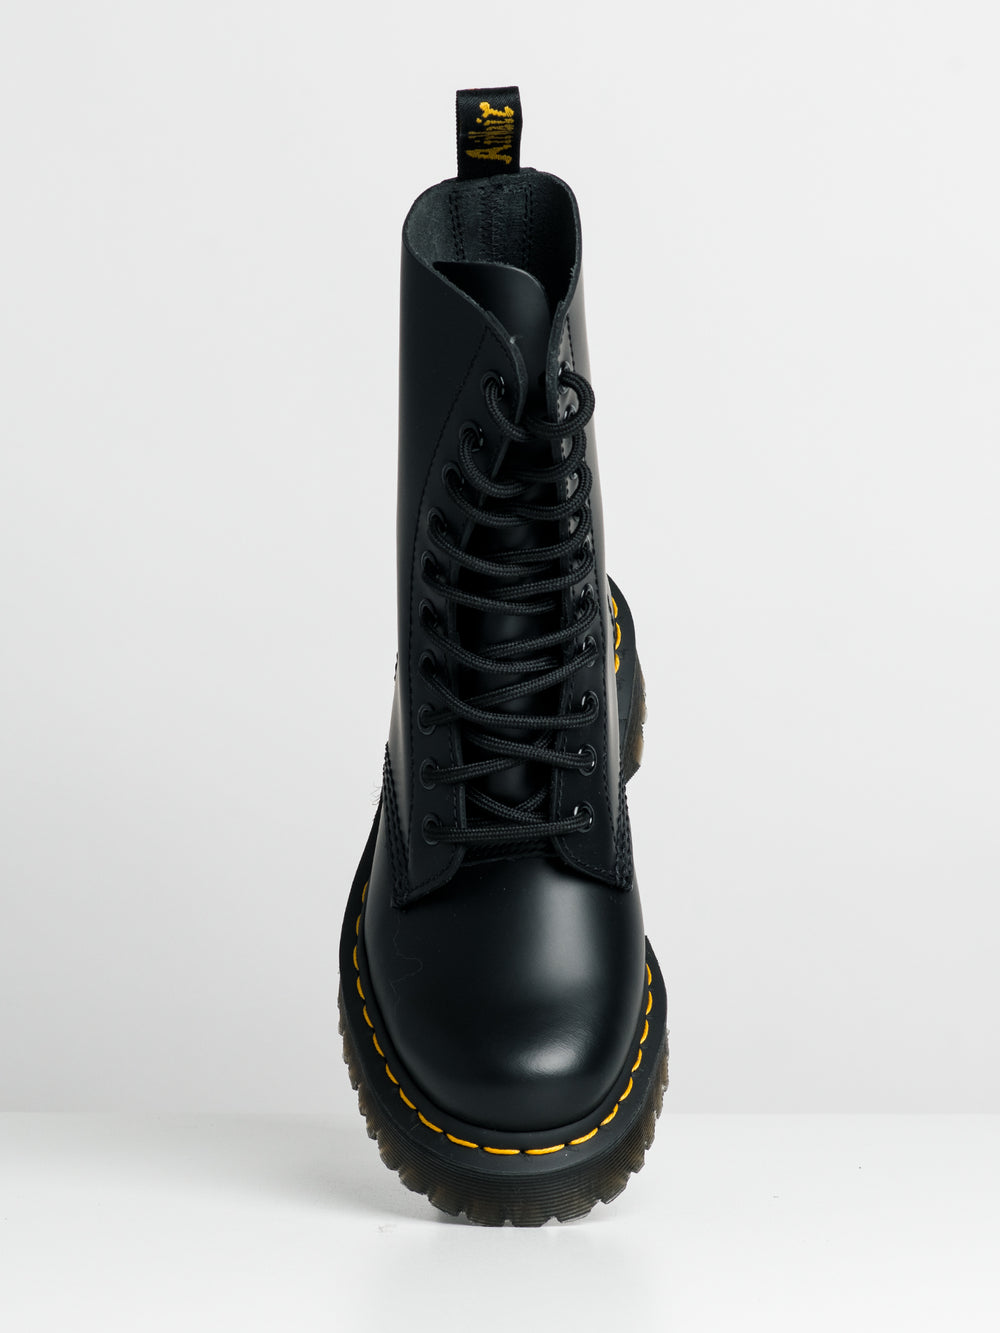 Dr Martens 1490 10 Eye Bex Boots in Black